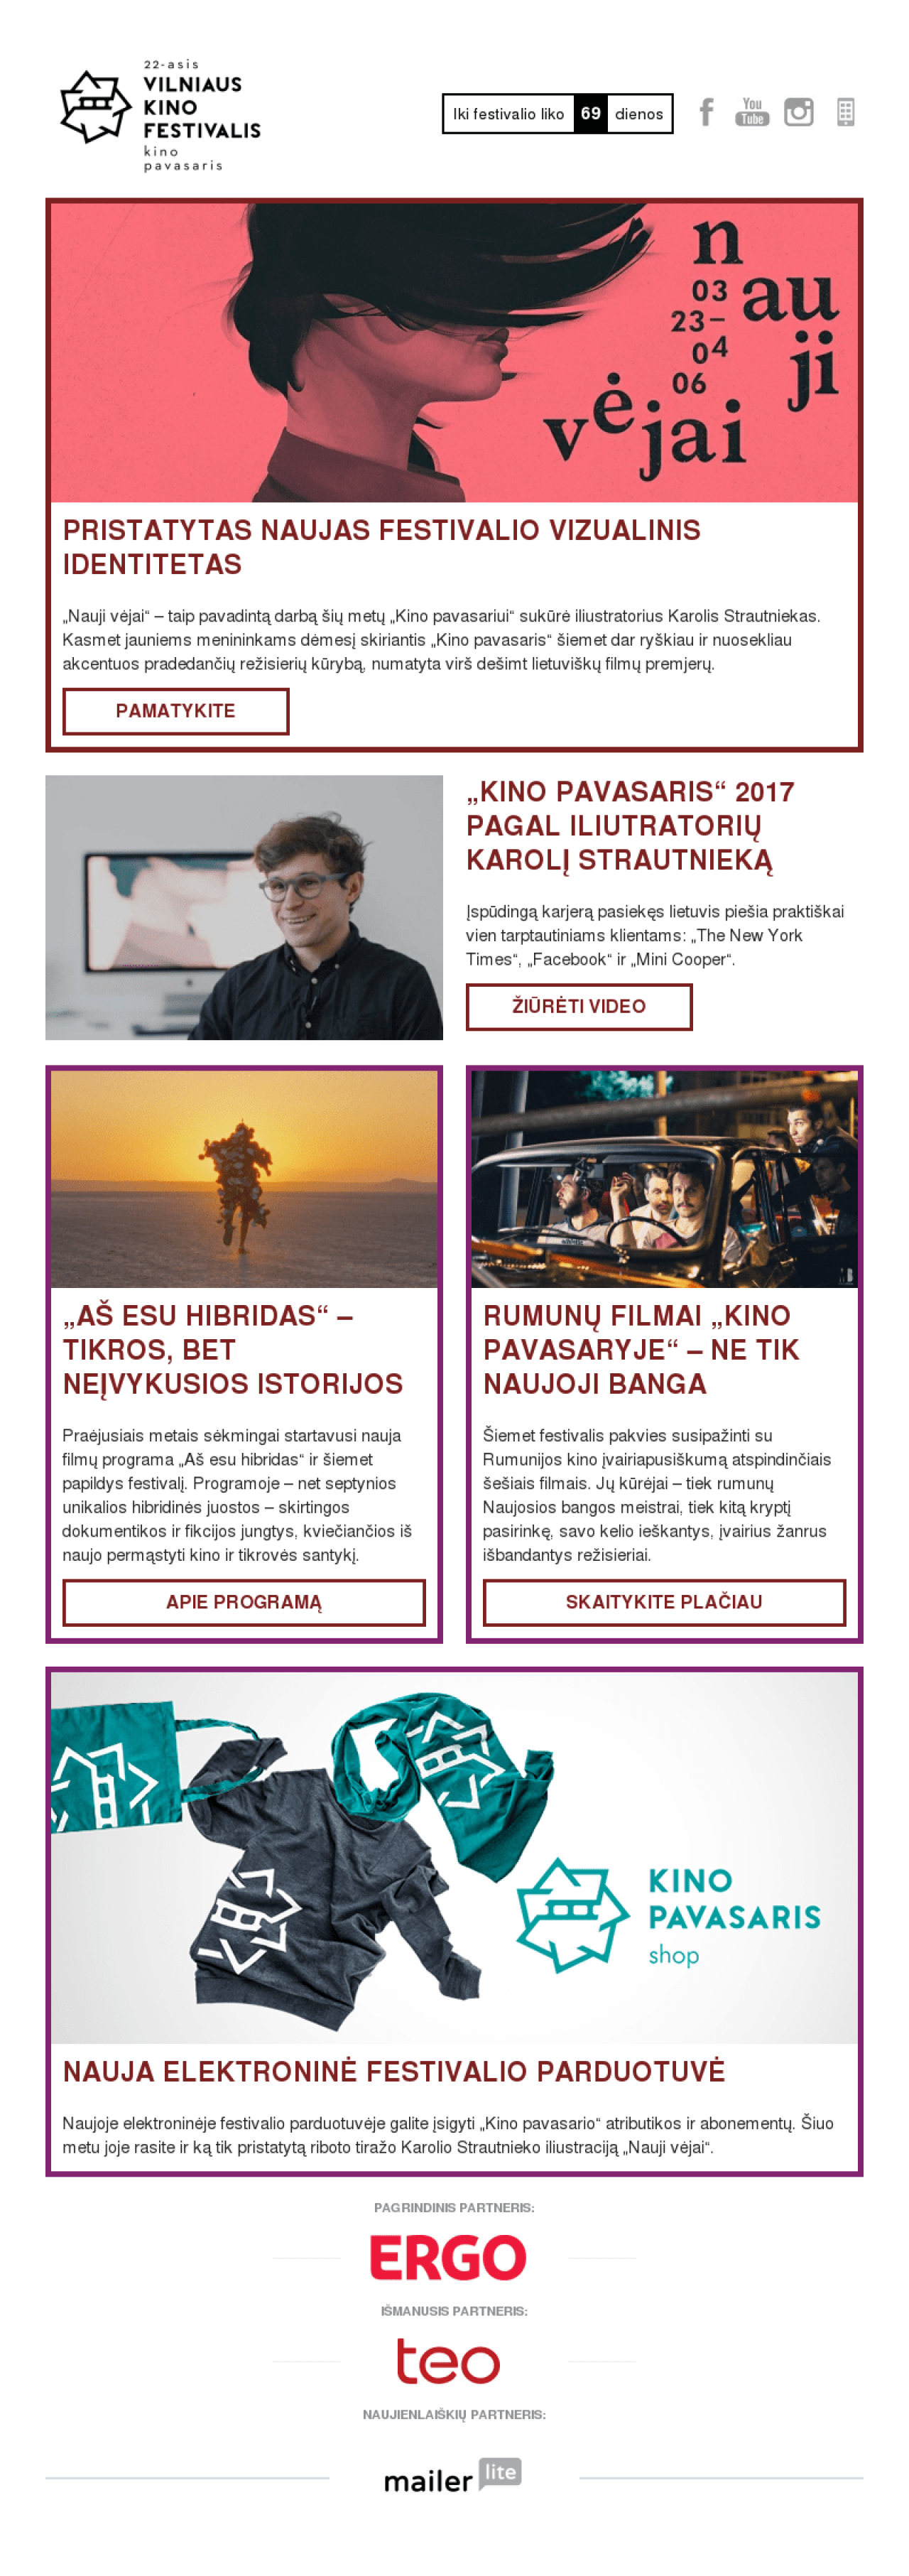 Vilnius International Film Festival example - Made with MailerLite